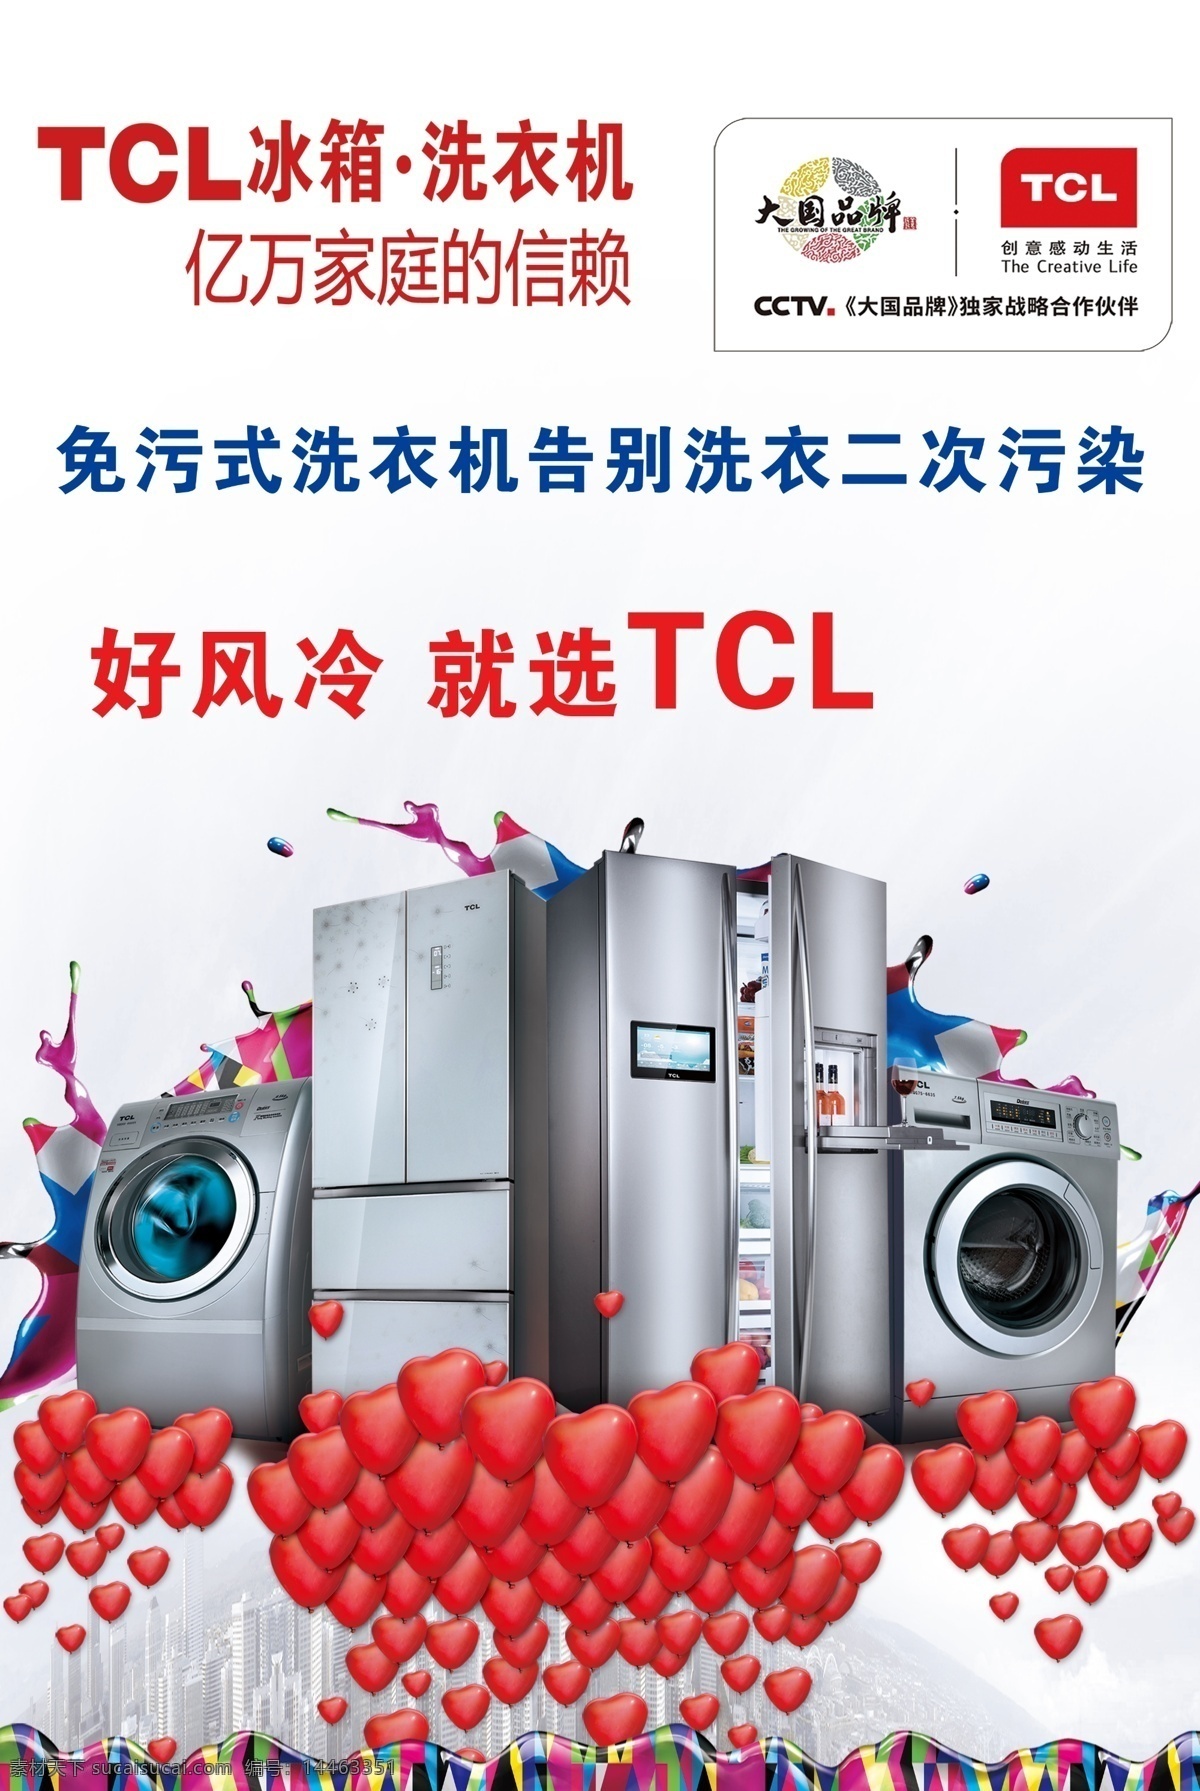 tcl洗衣机 洗衣机 tcl冰箱 tcl广告 tcl电器 tcl tcl背景 清凉背景 空调海报